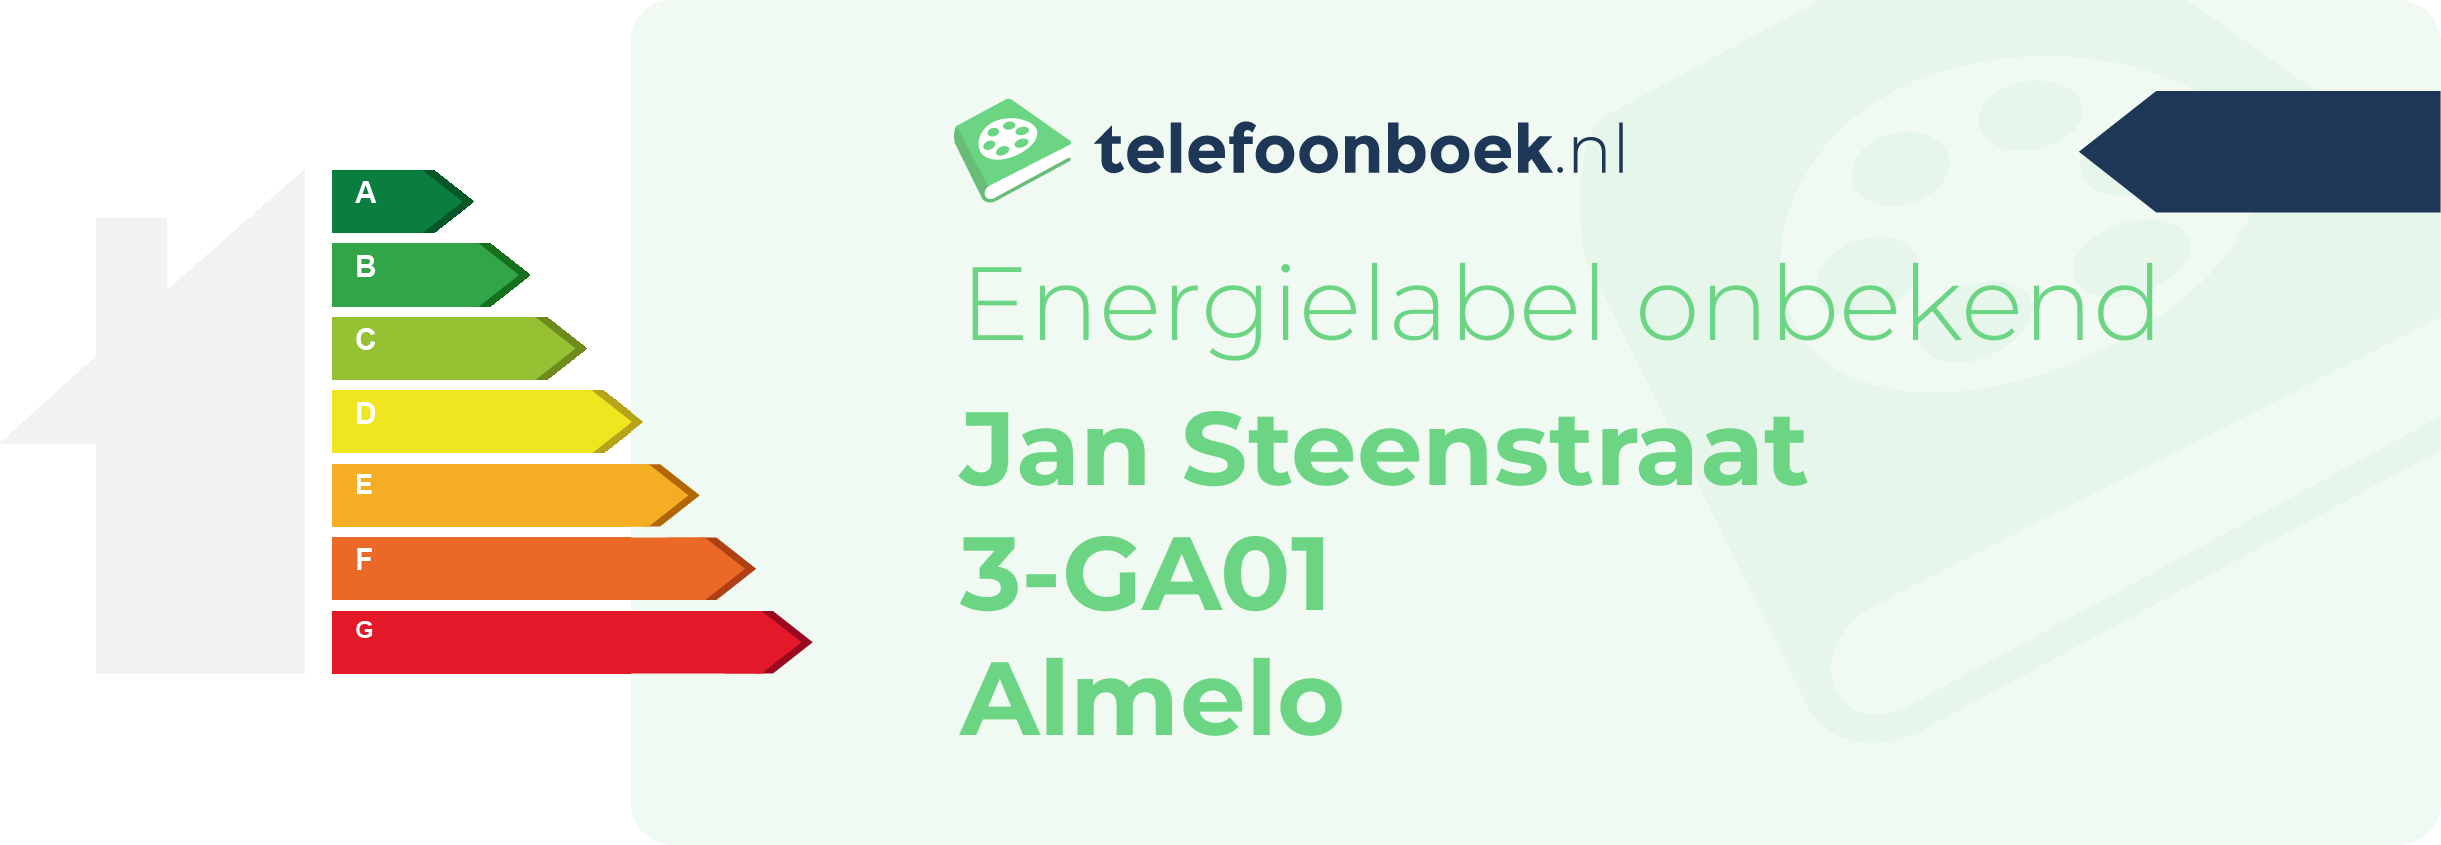 Energielabel Jan Steenstraat 3-GA01 Almelo